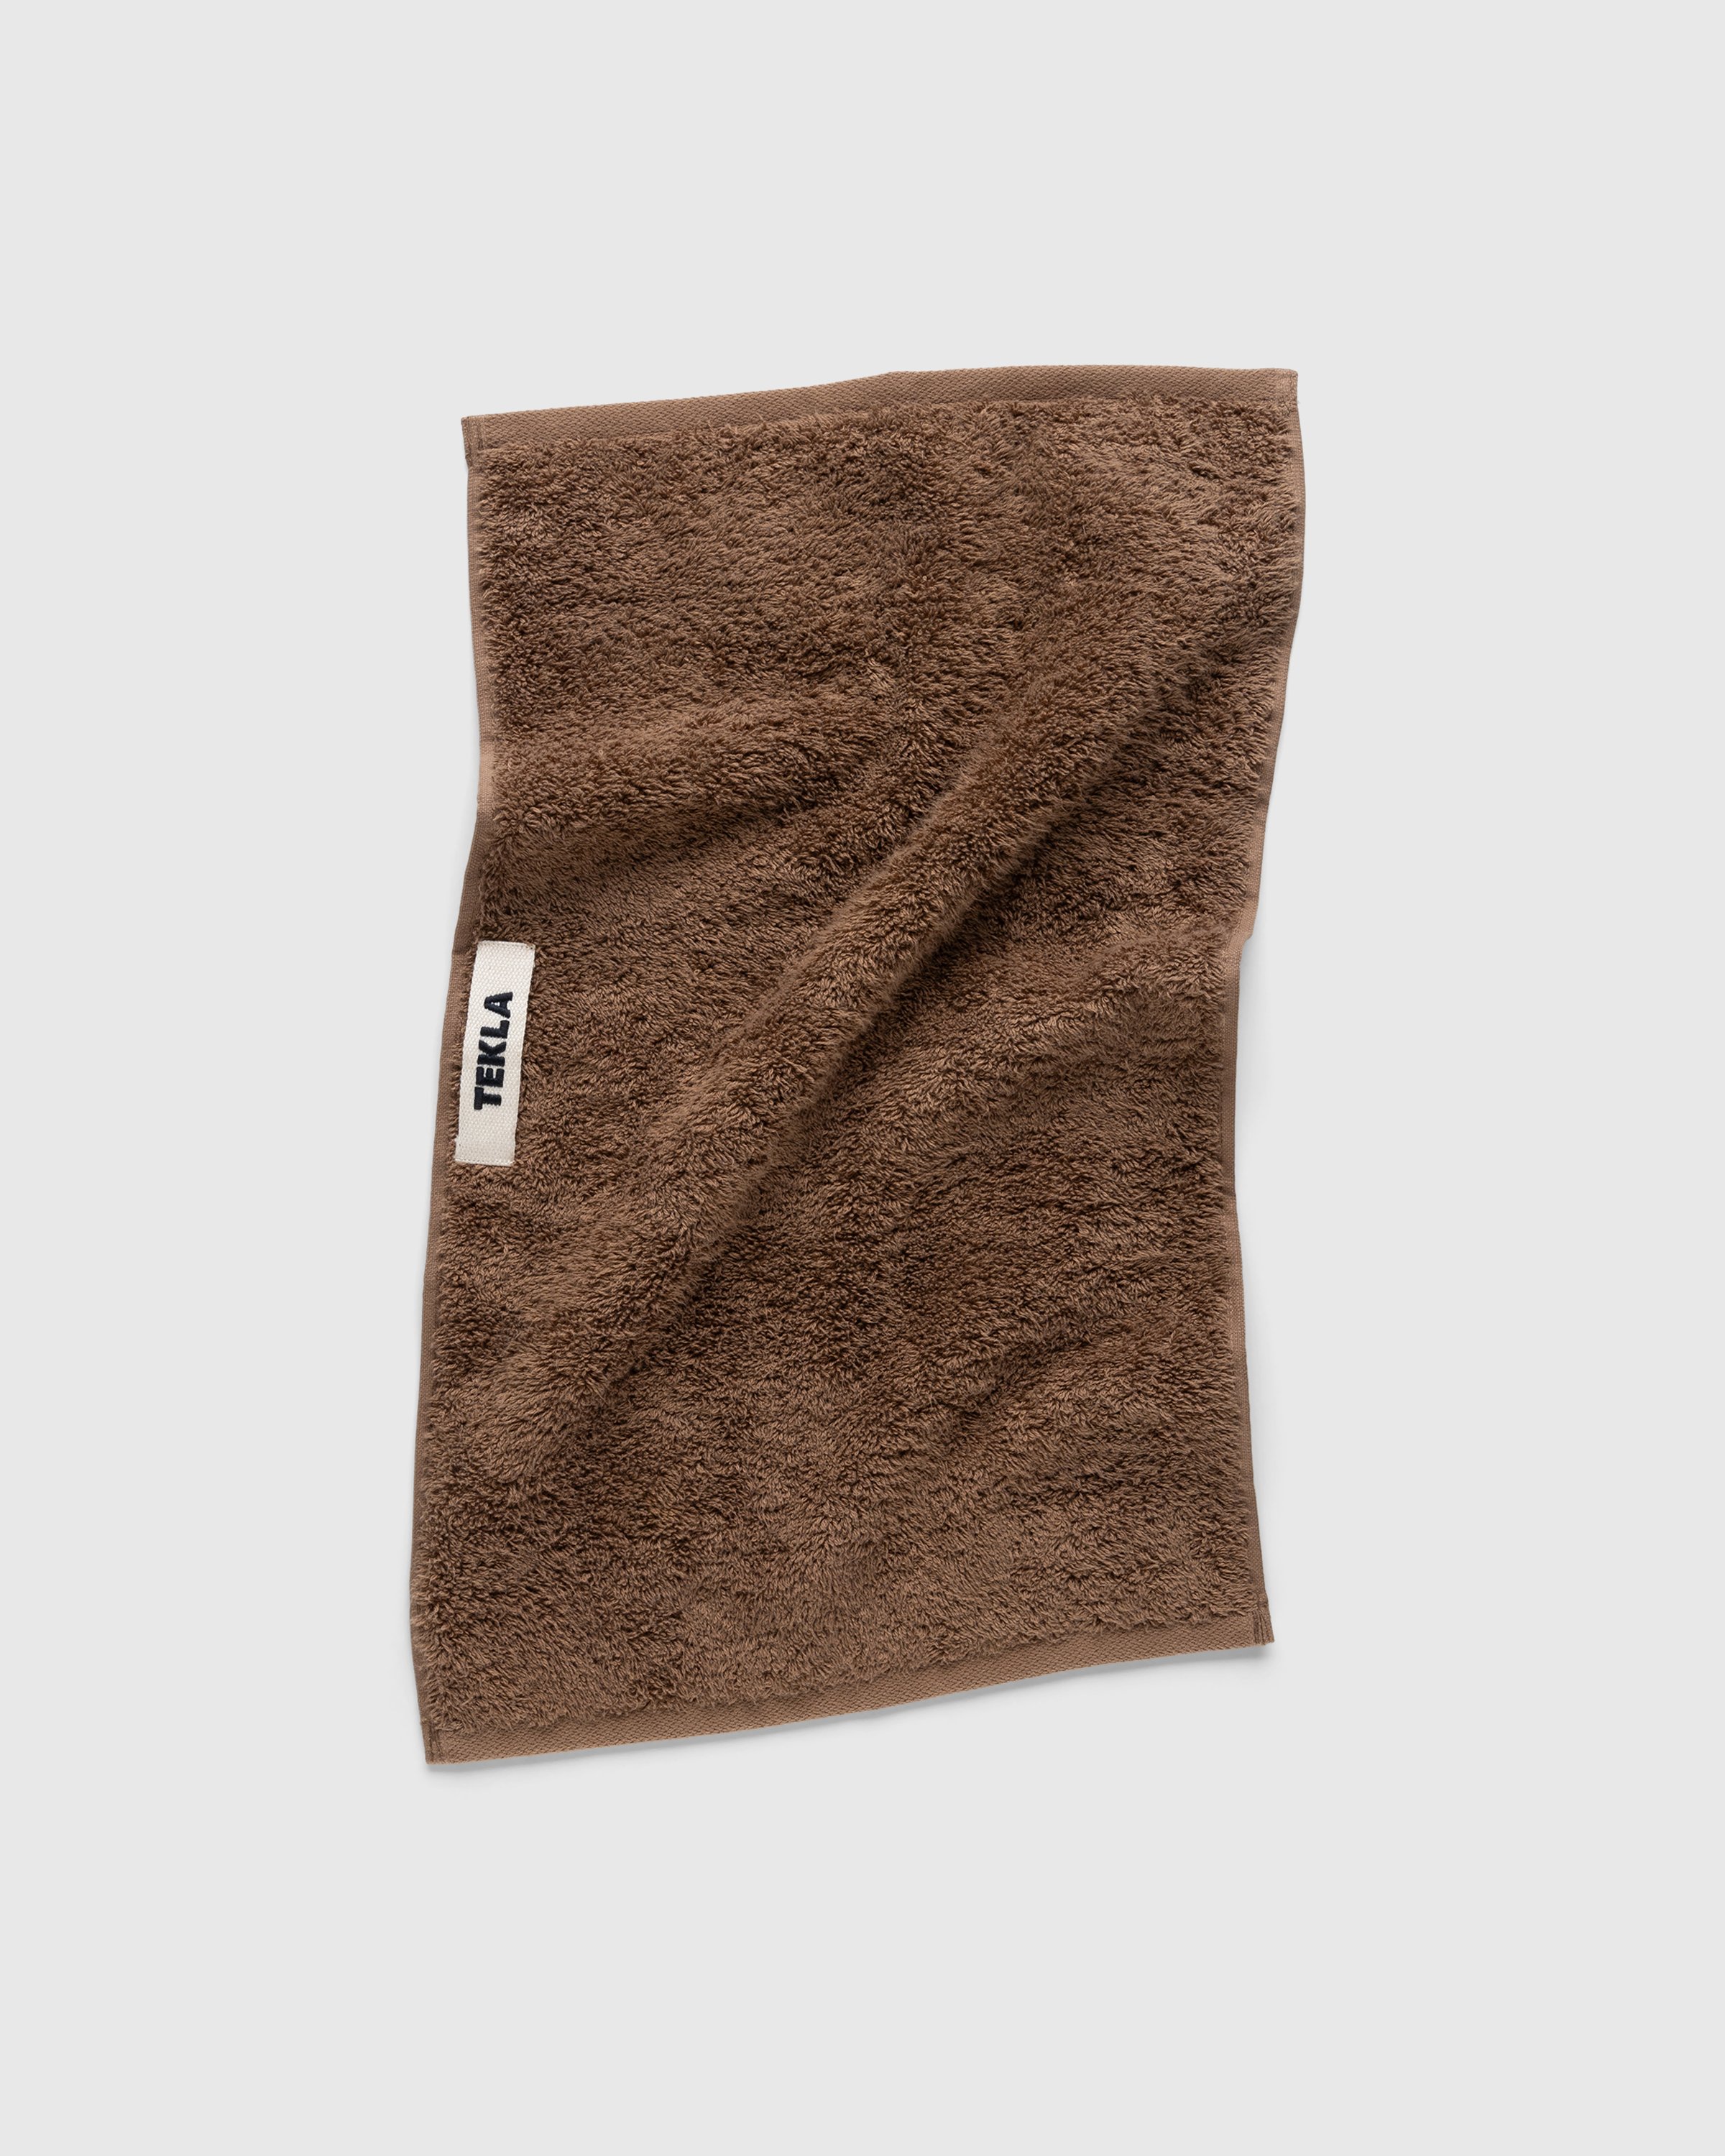 Tekla - Guest Towel Kodiak Brown - Lifestyle - Brown - Image 1